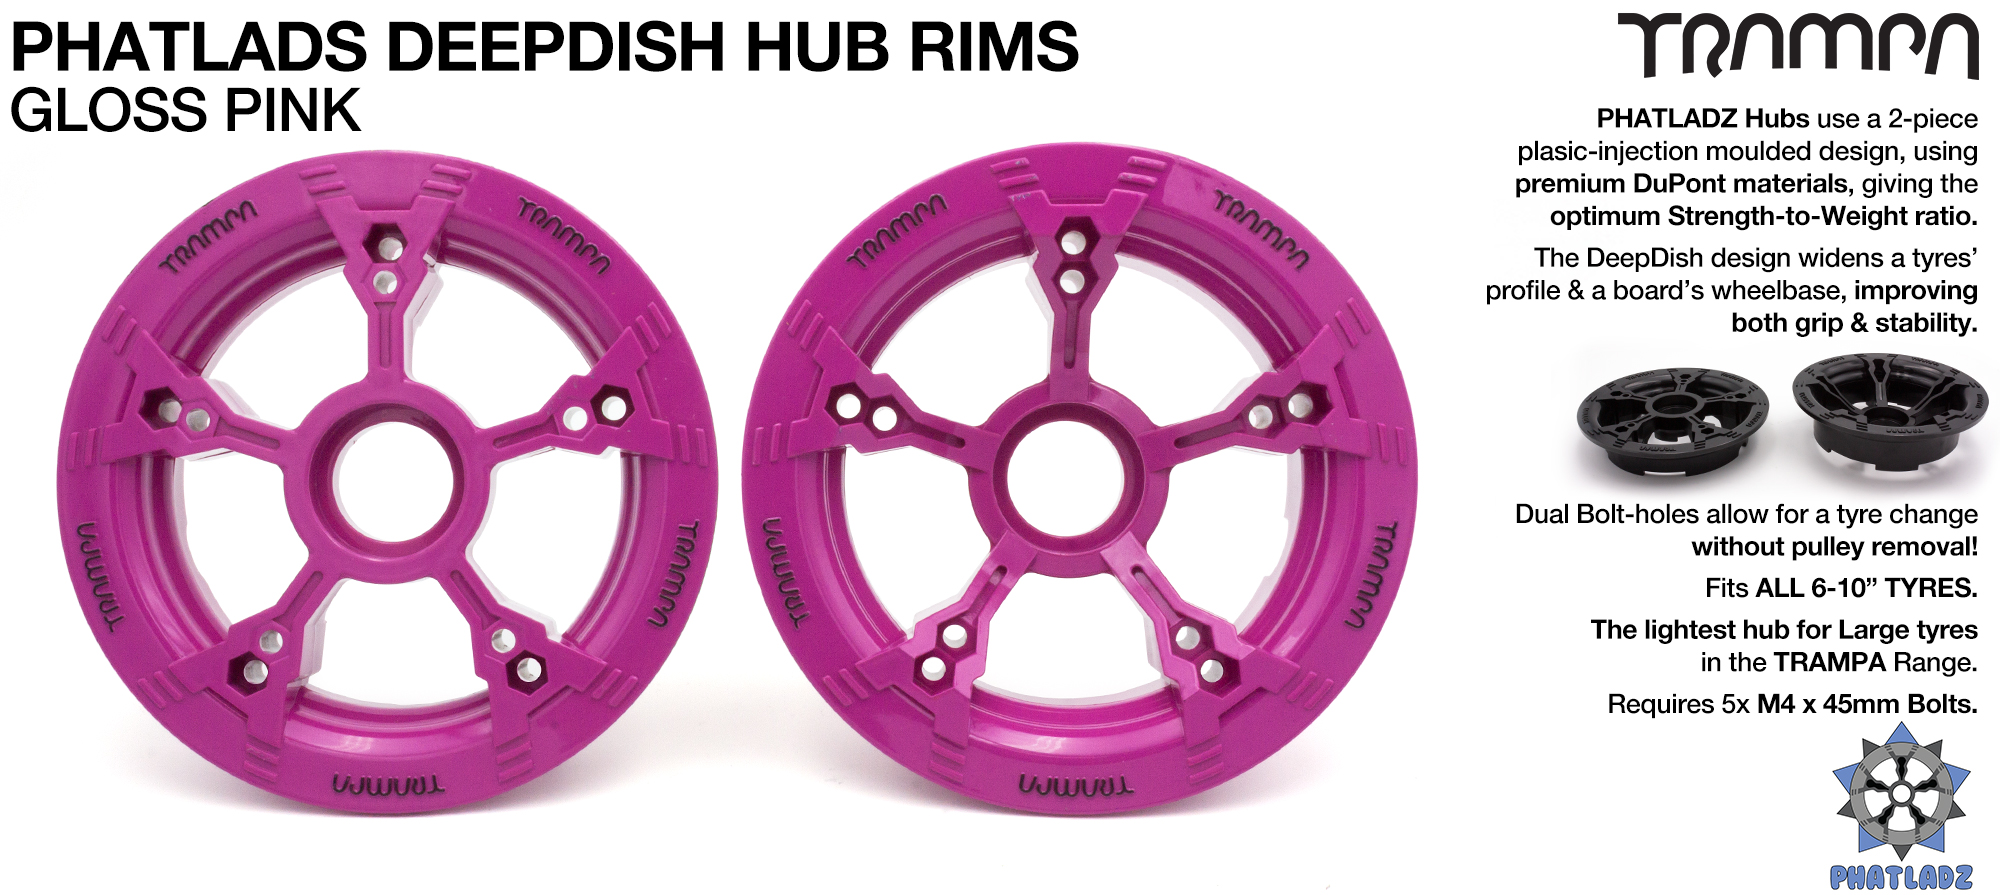 PHATLADS - 5 Spoke Hub Deep Dish Split Rim hub natural PINK with Black Logo fits 6,7,8,9 & 10 Inch tyres!! Amazing - NO BOLTS 